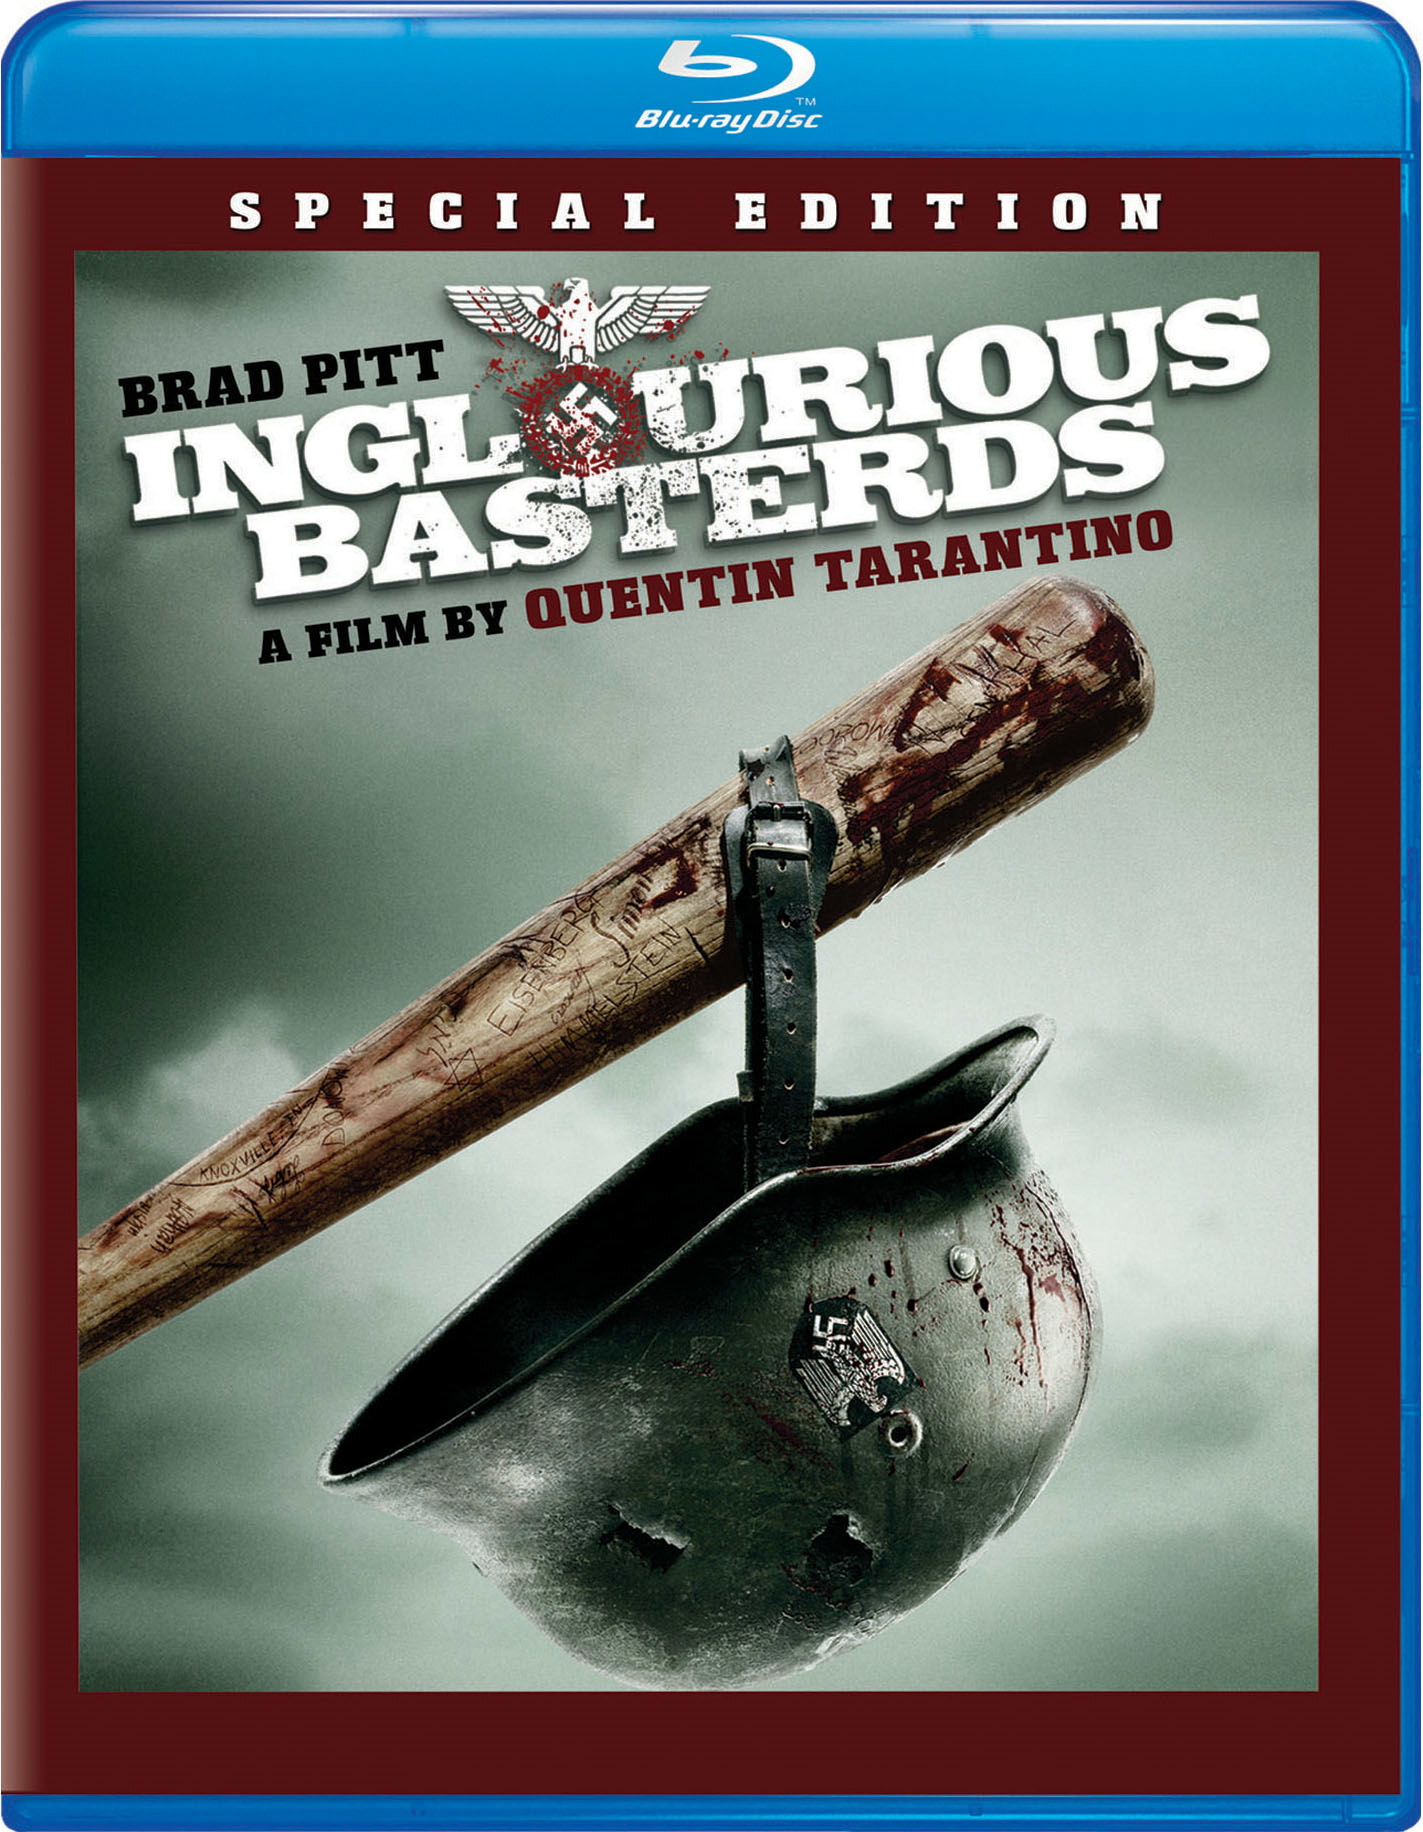 Inglourious Basterds (Blu-ray New Packaging) - Blu-ray [ 2009 ]  - War Movies On Blu-ray - Movies On GRUV